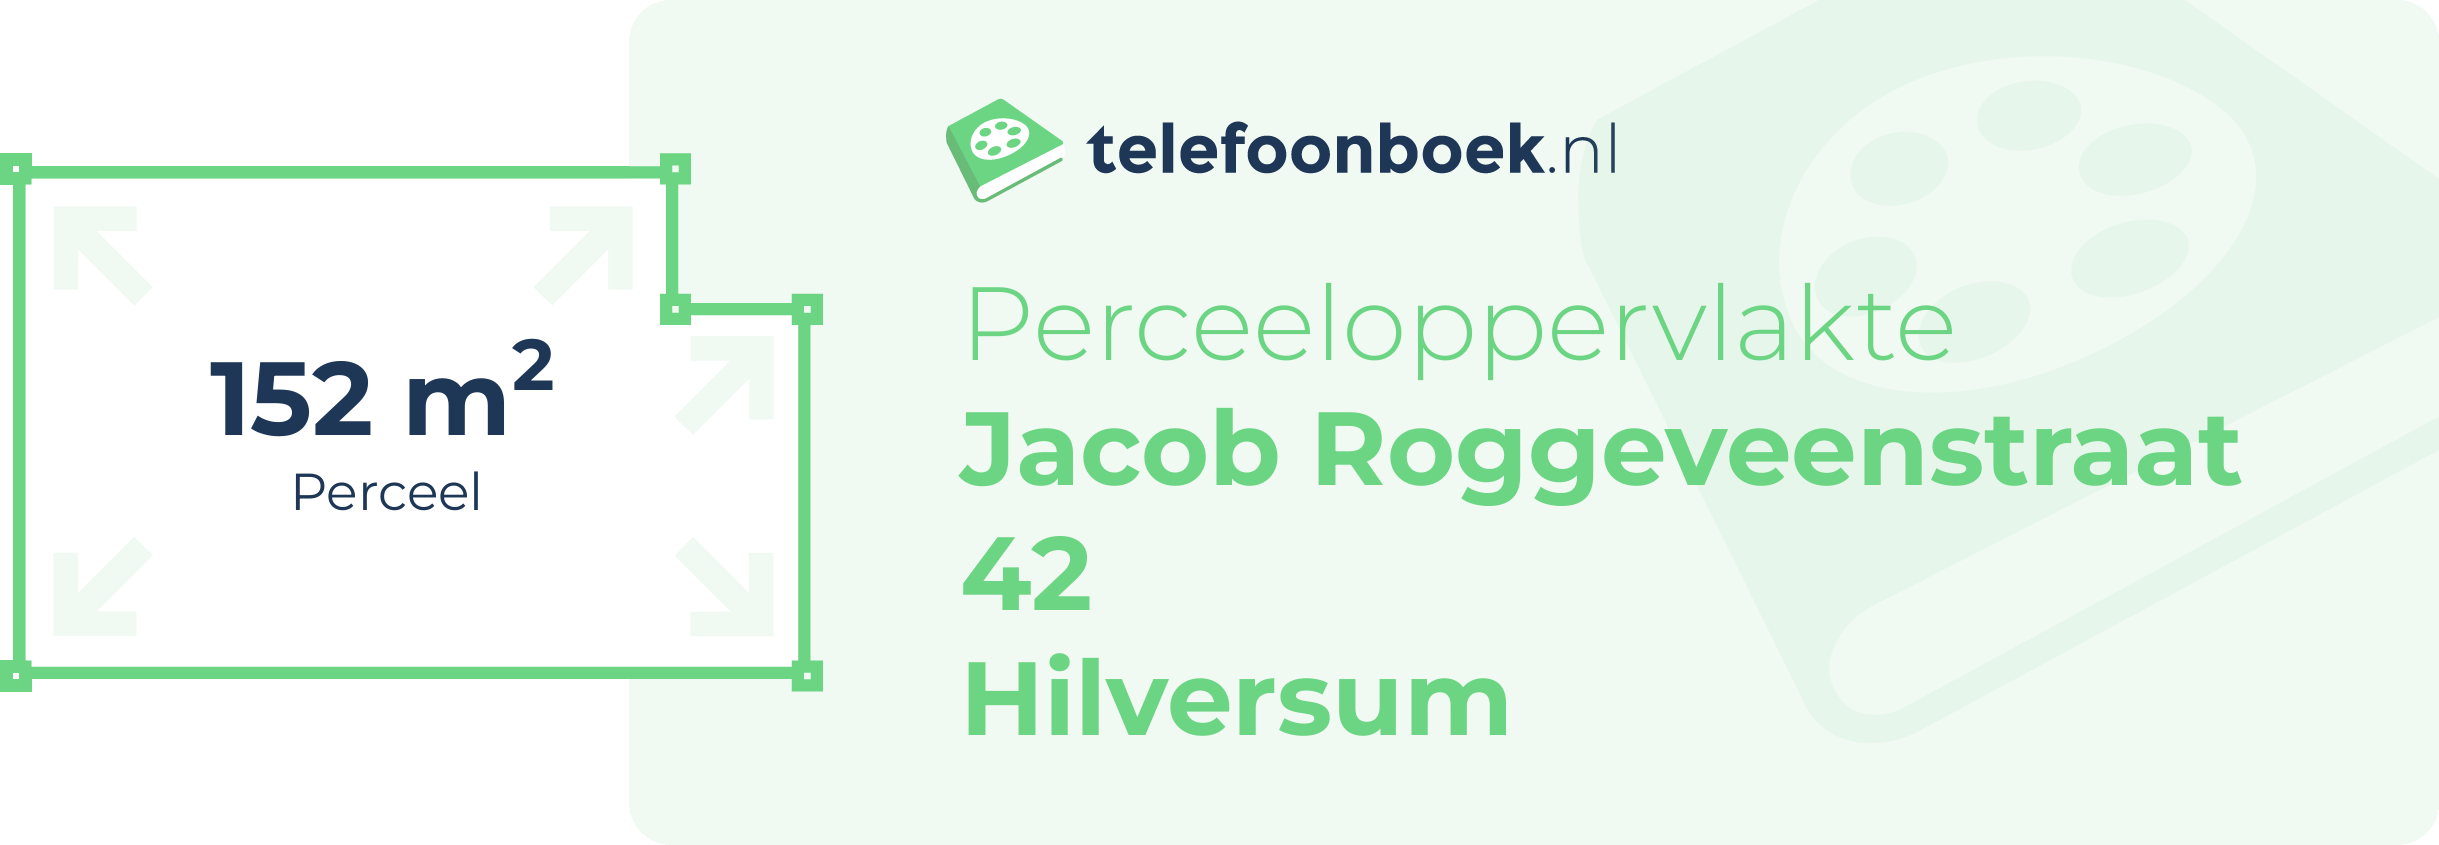 Perceeloppervlakte Jacob Roggeveenstraat 42 Hilversum